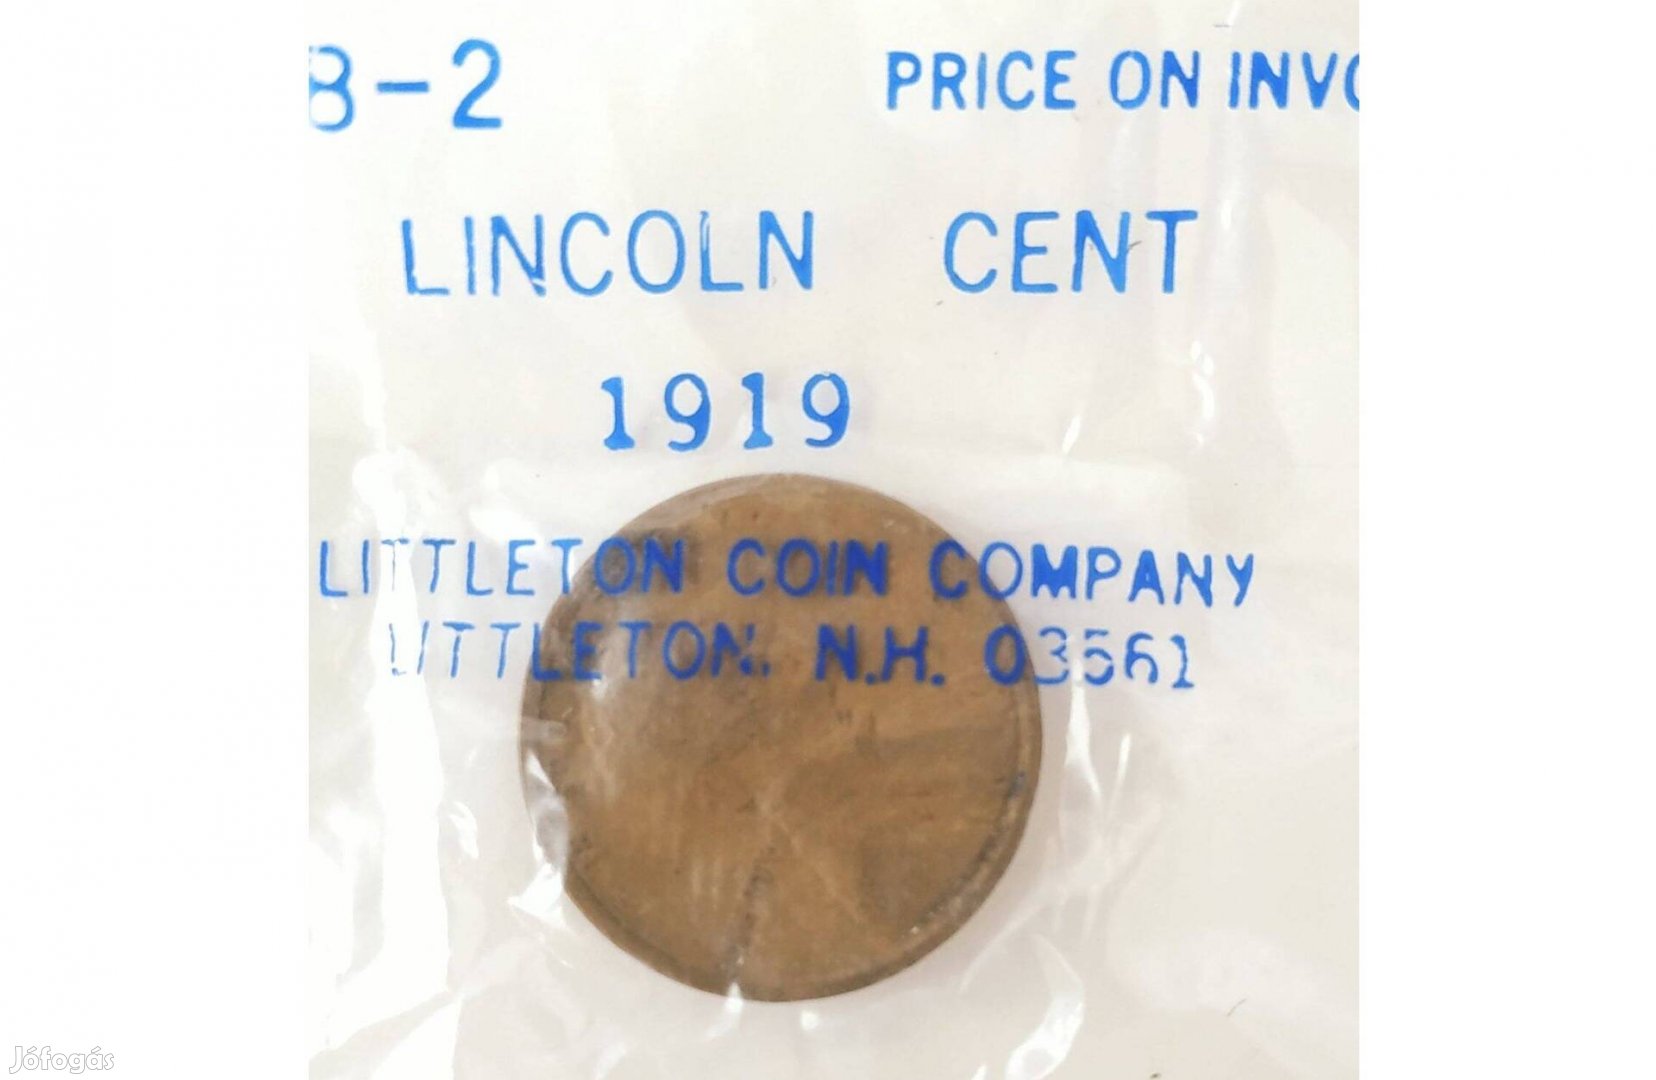 'Lincoln cent 1919' Littleton Coin Company - bontatlan